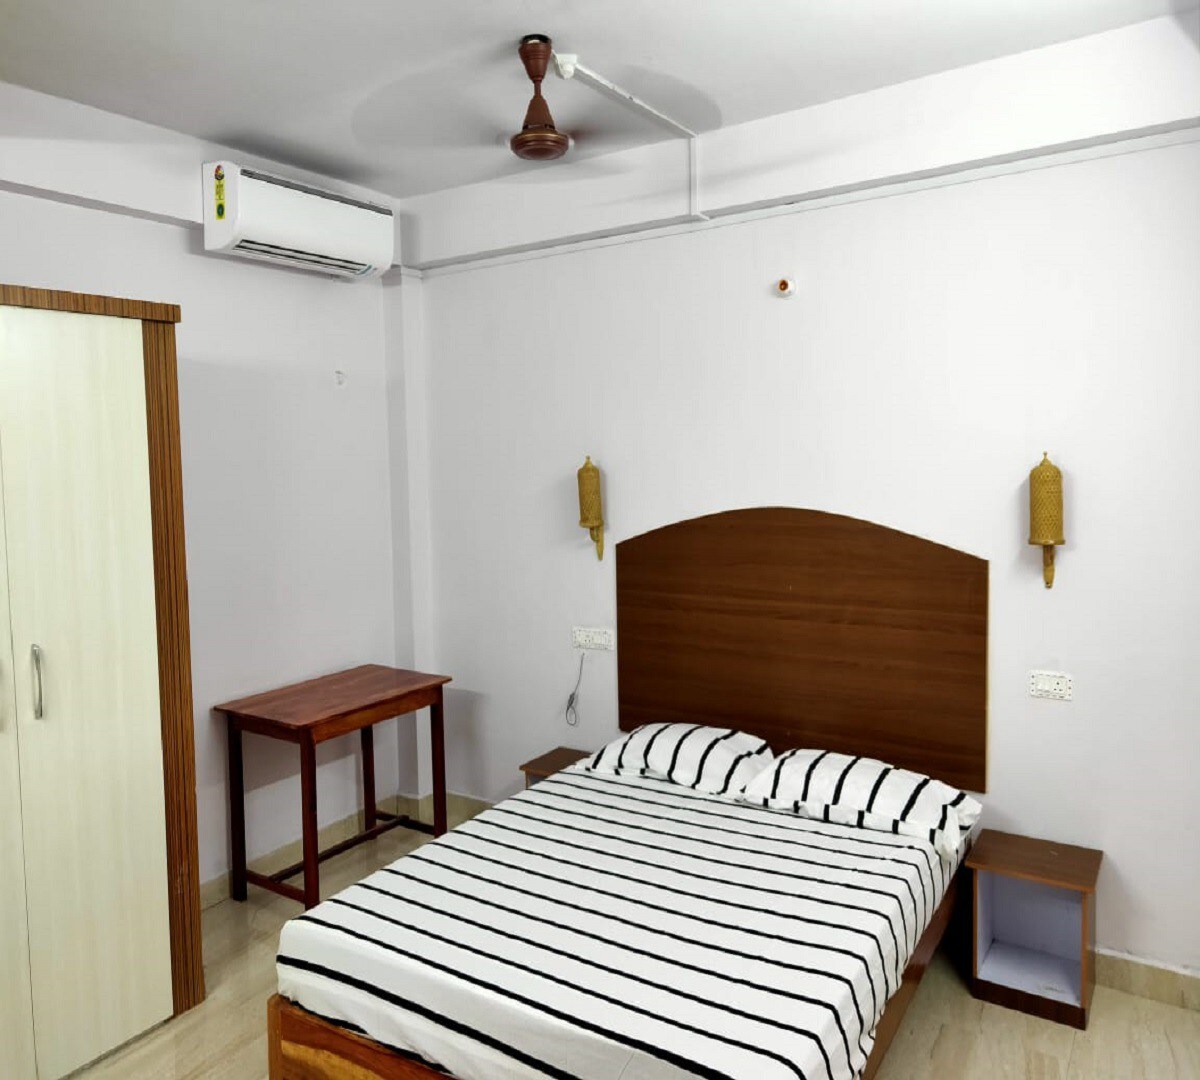 Deluxe Room / Aashrey Bed and Breakfast